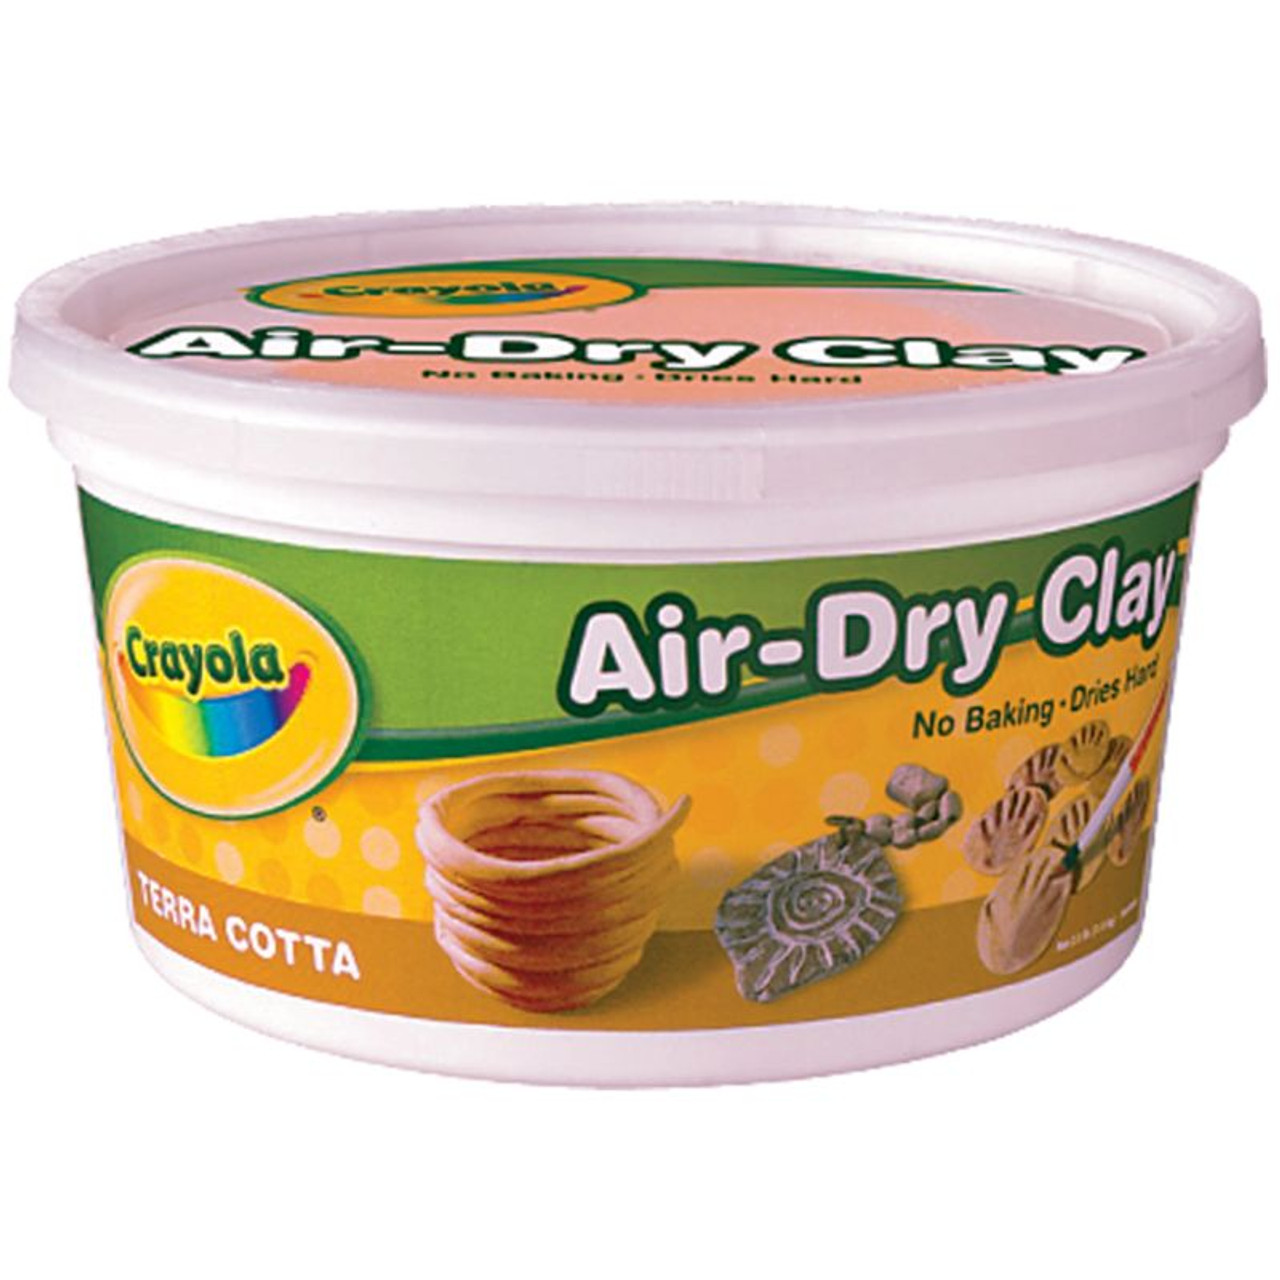 Crayola® Air-Dry Clay, 5 lb. Bucket, White, 1 Each